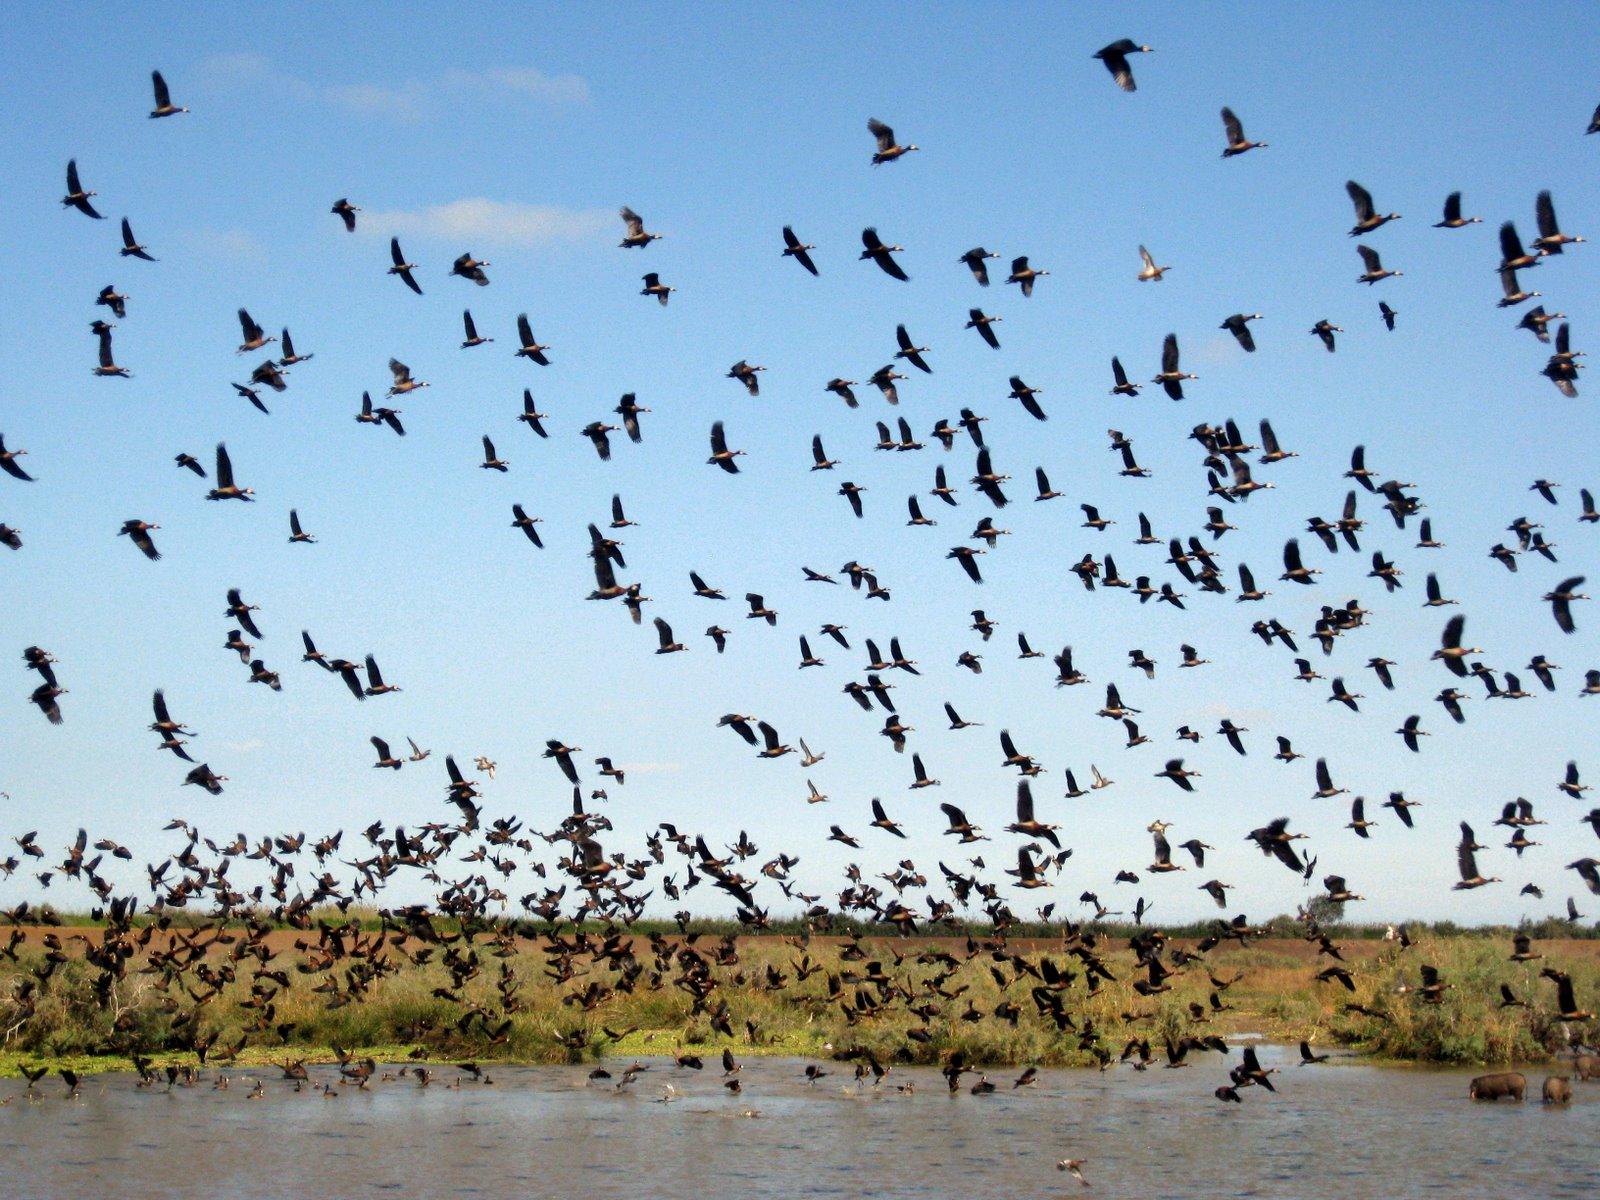 朱賈國傢鳥類保護區 Djoudj National Bird Sanctuary